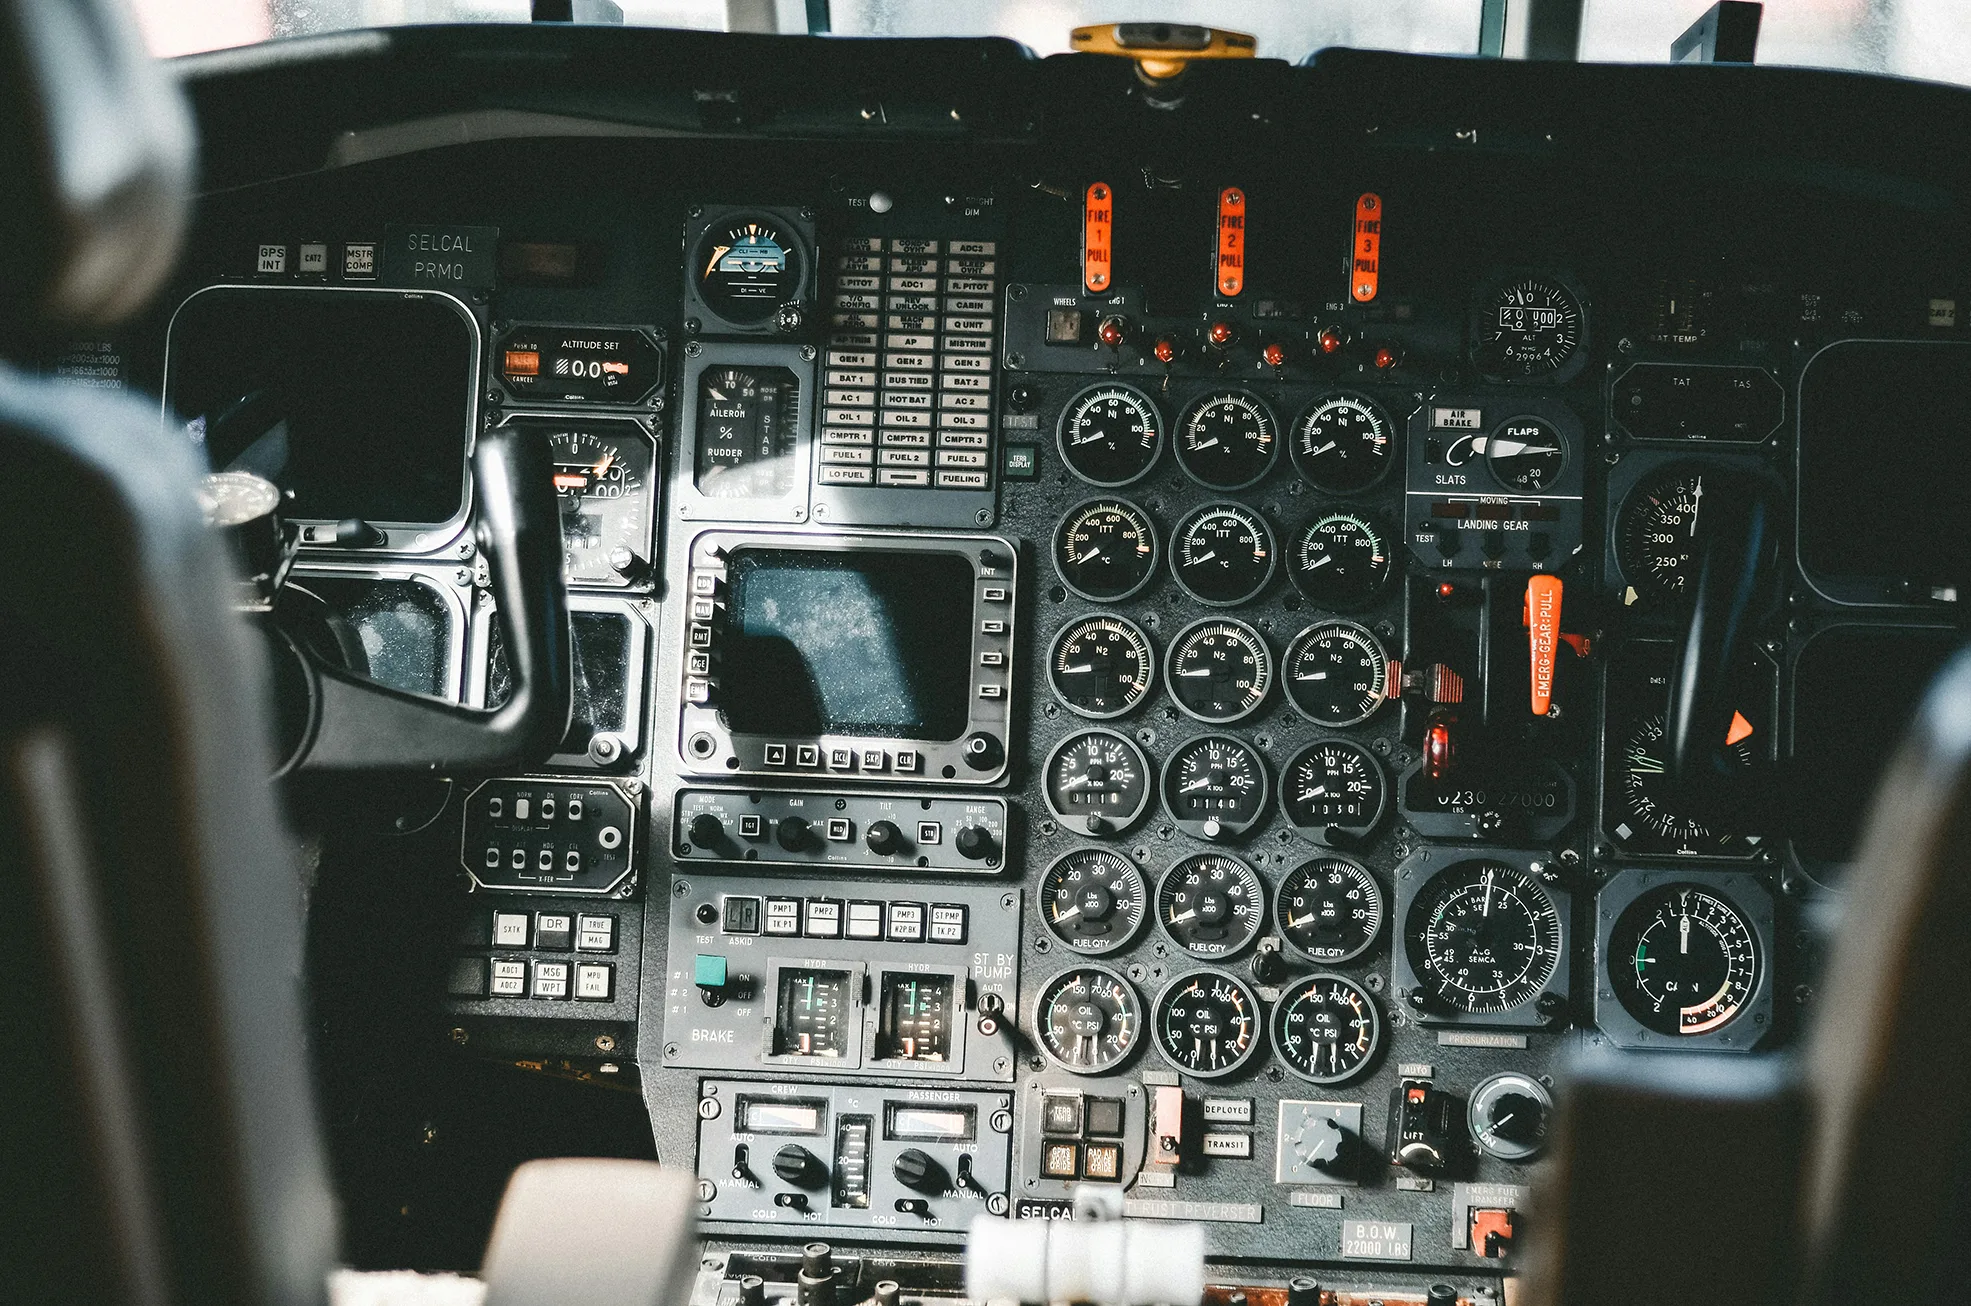 Cockpit panel